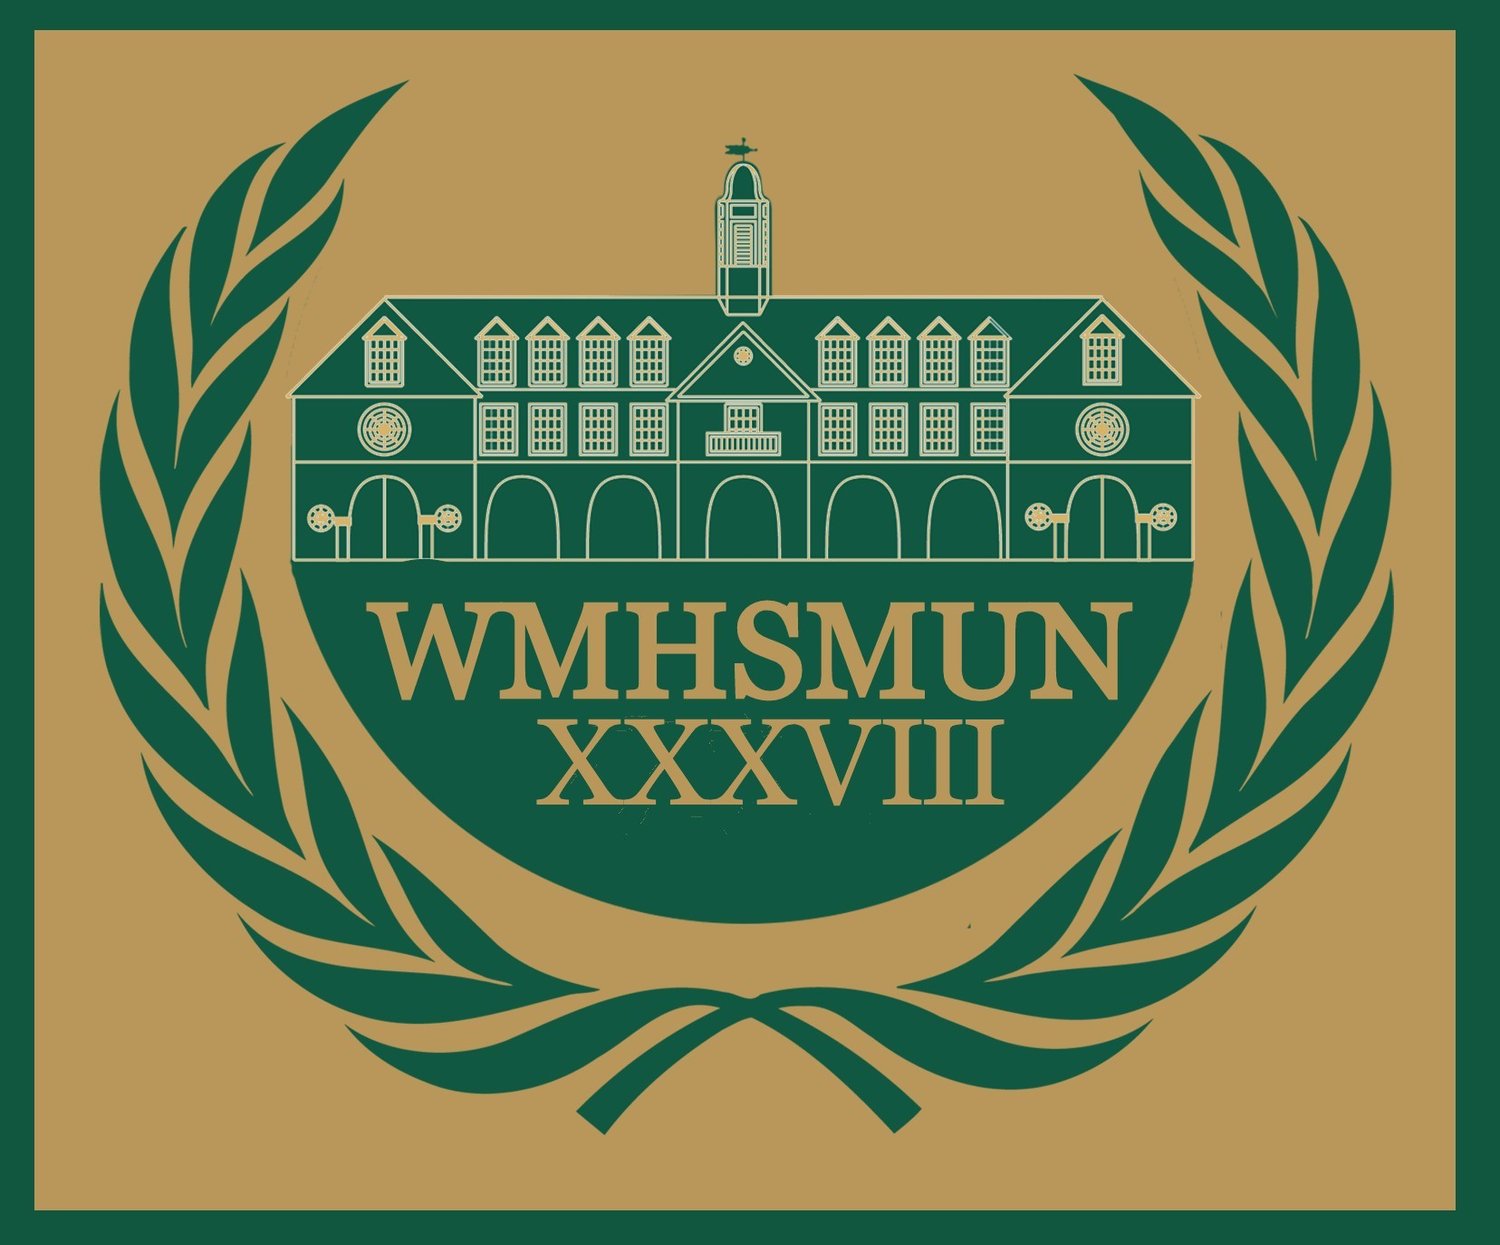 WMHSMUN XXXVIII